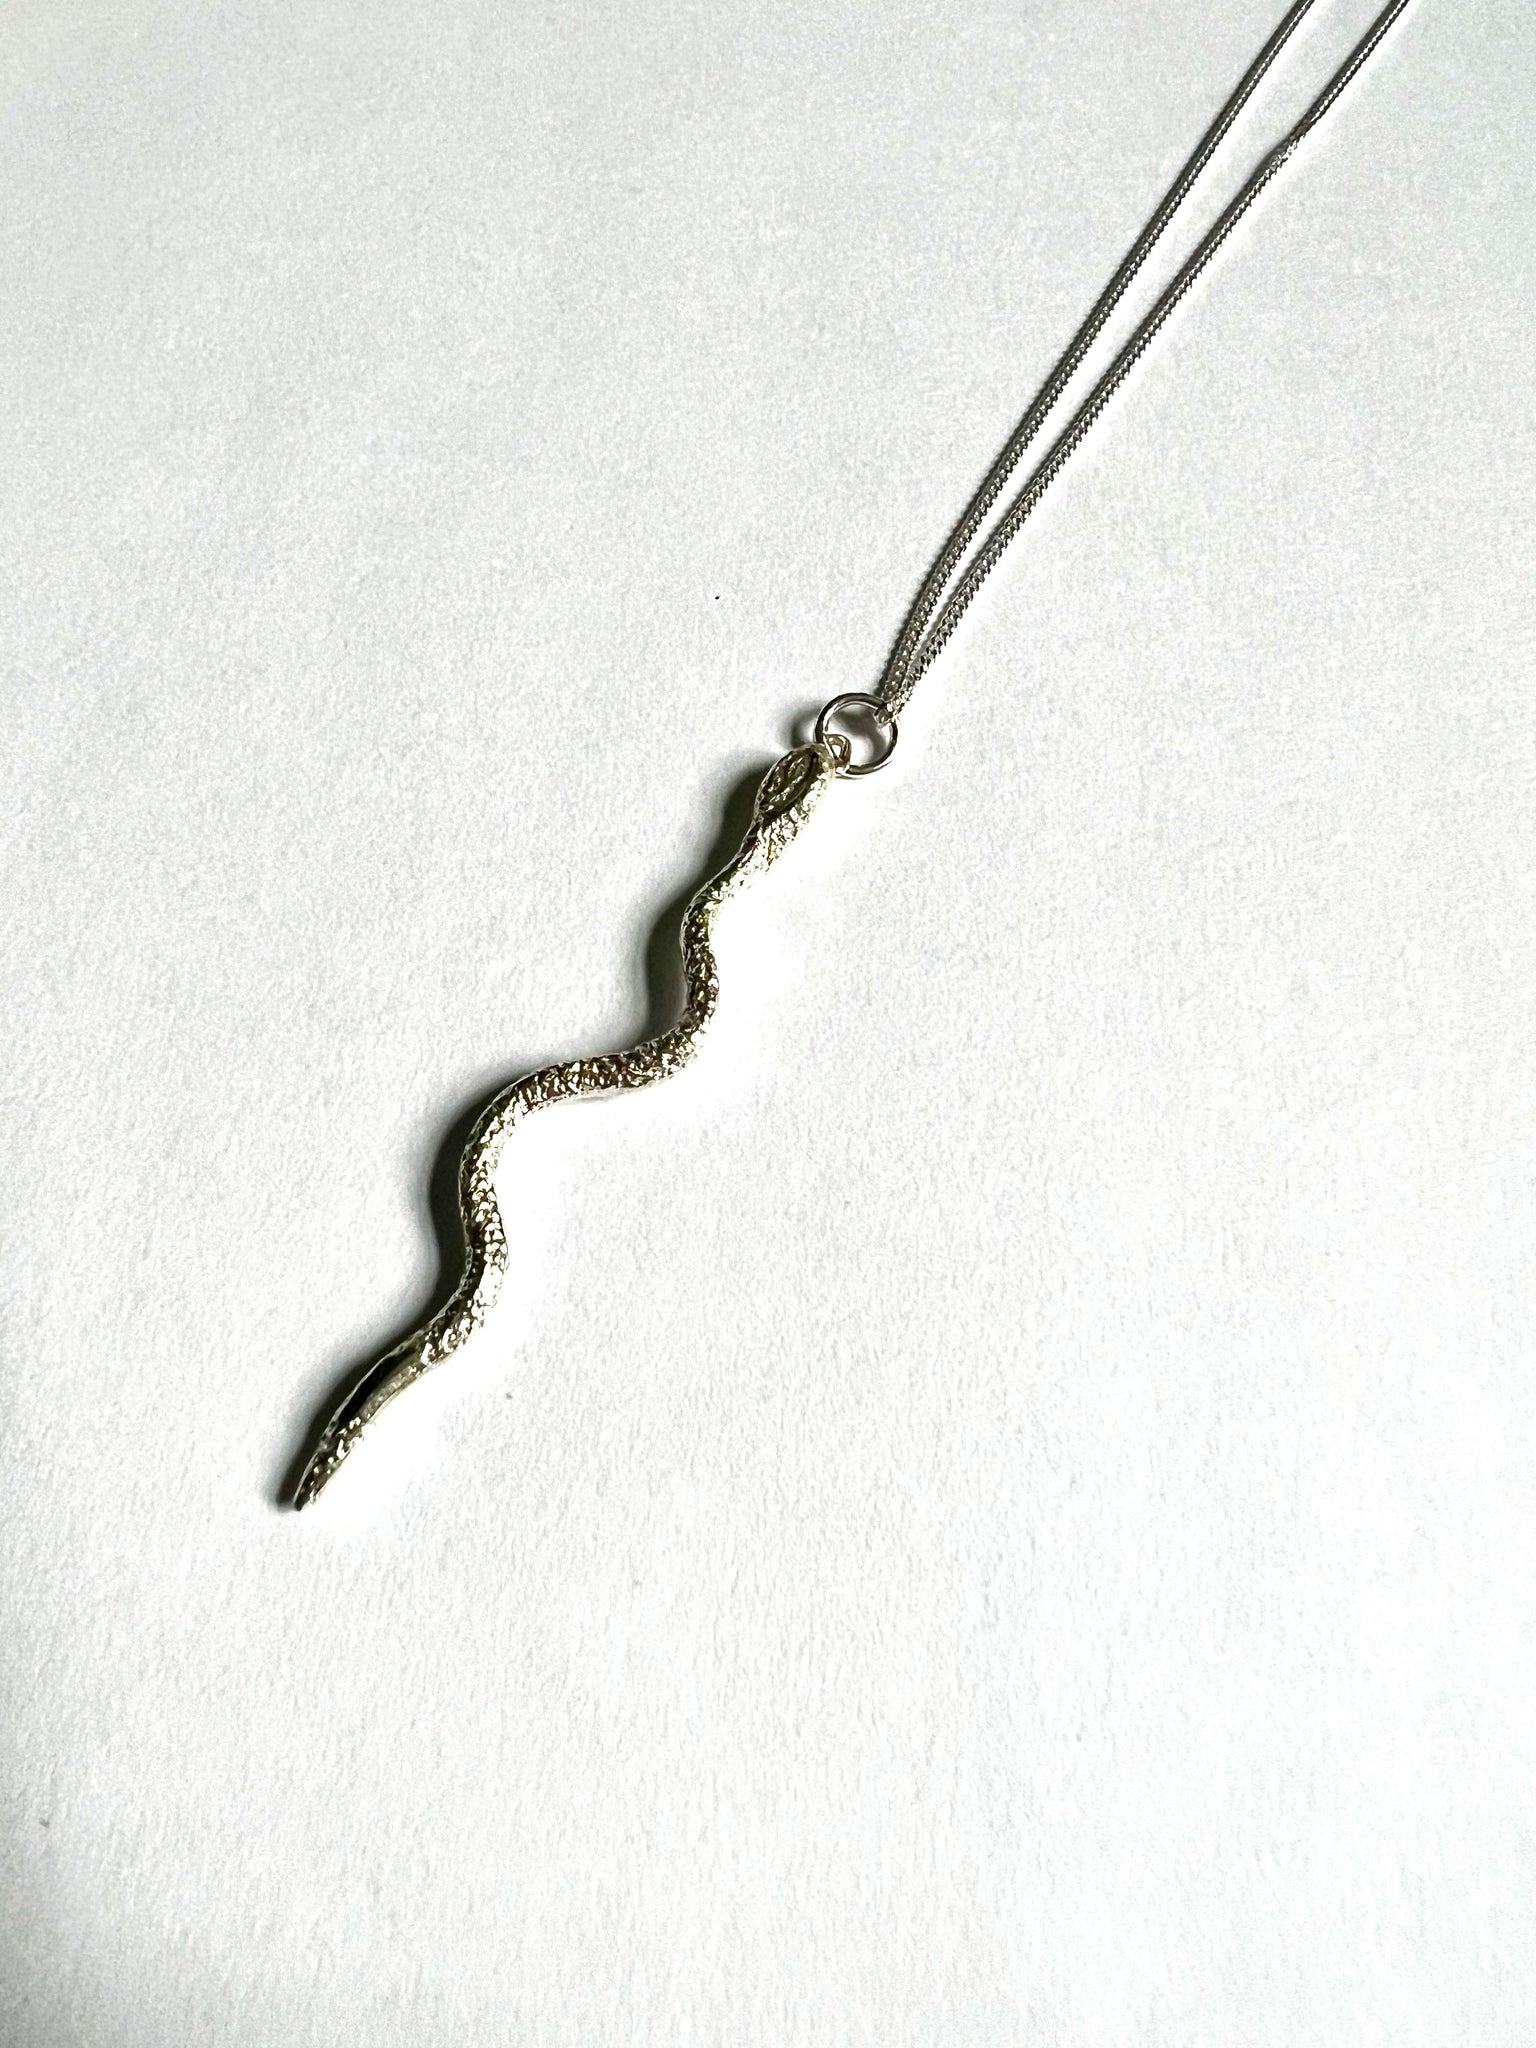 Snake Necklace - Sterling Silver